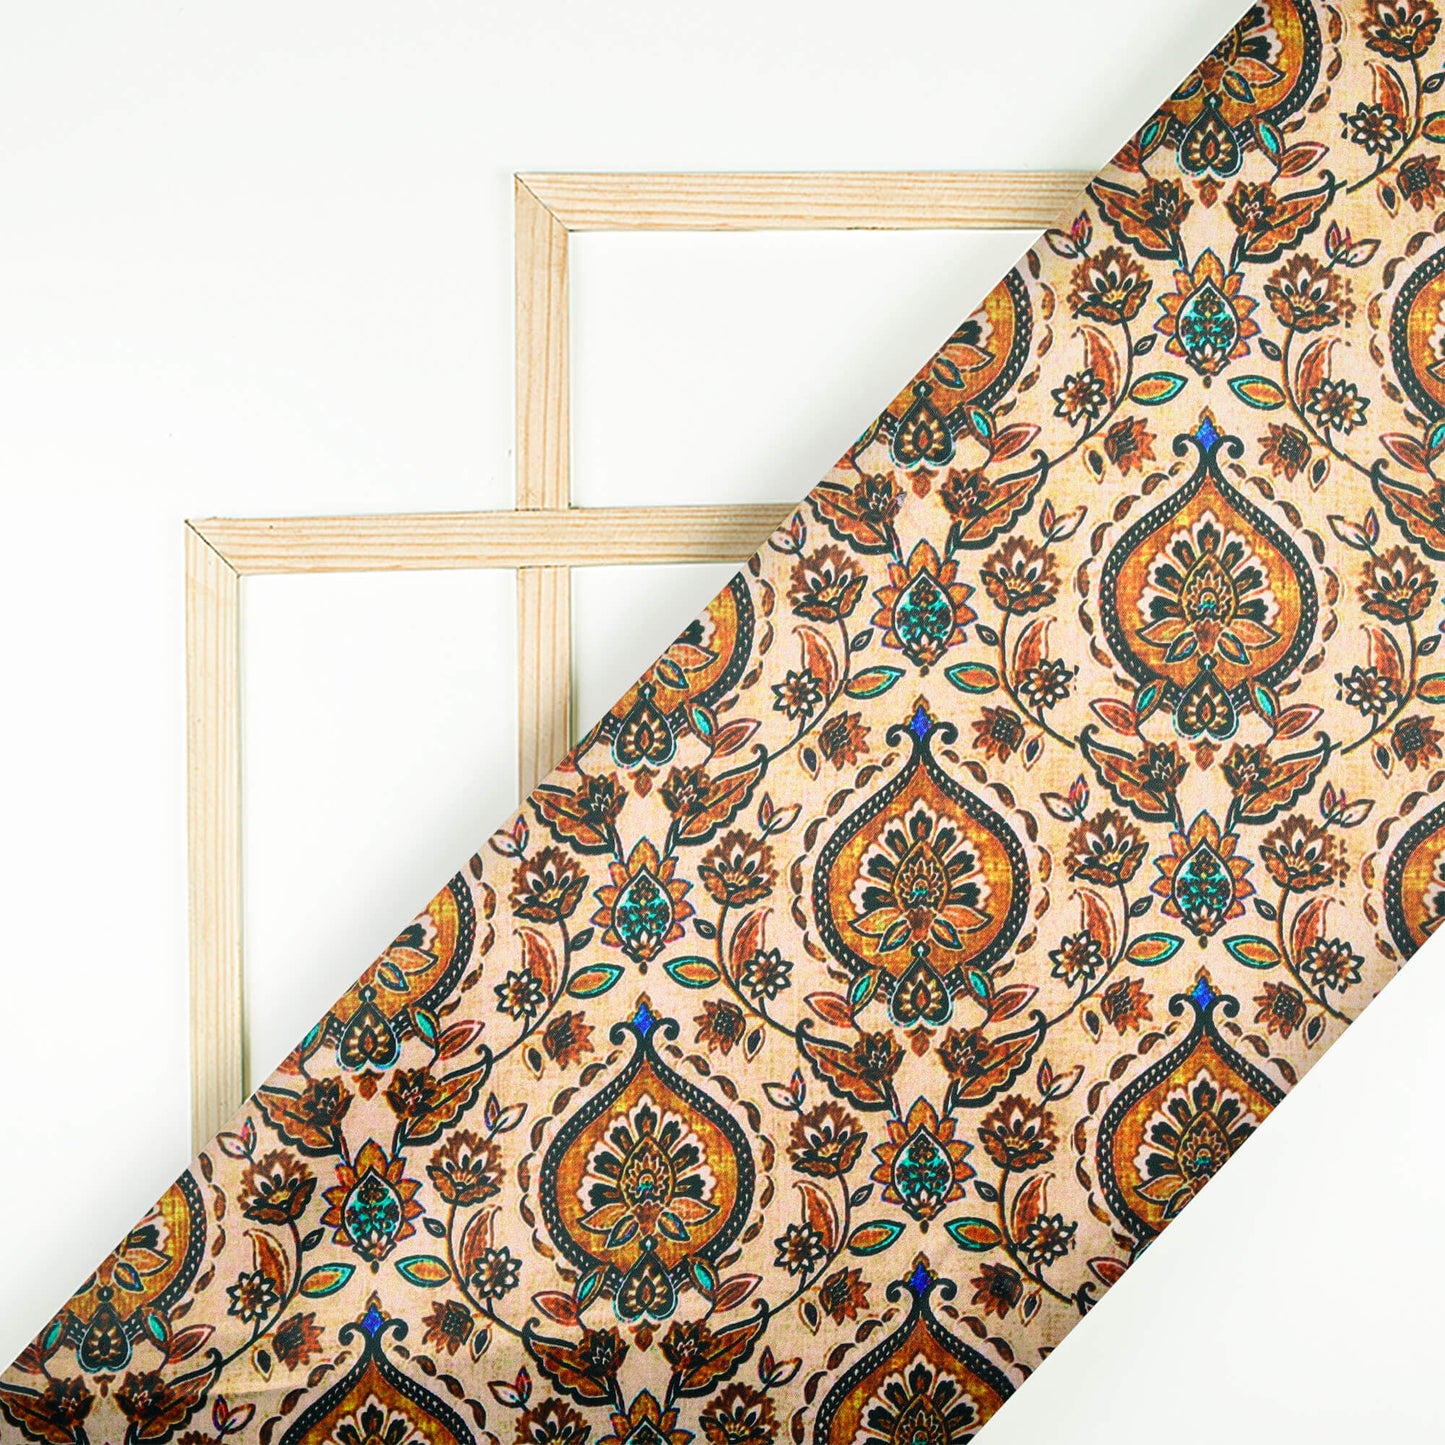 Ivory Cream And Caramel Brown Traditional Pattern Digital Print Jacquard Sherwani Fabric (Width 56 Inches)